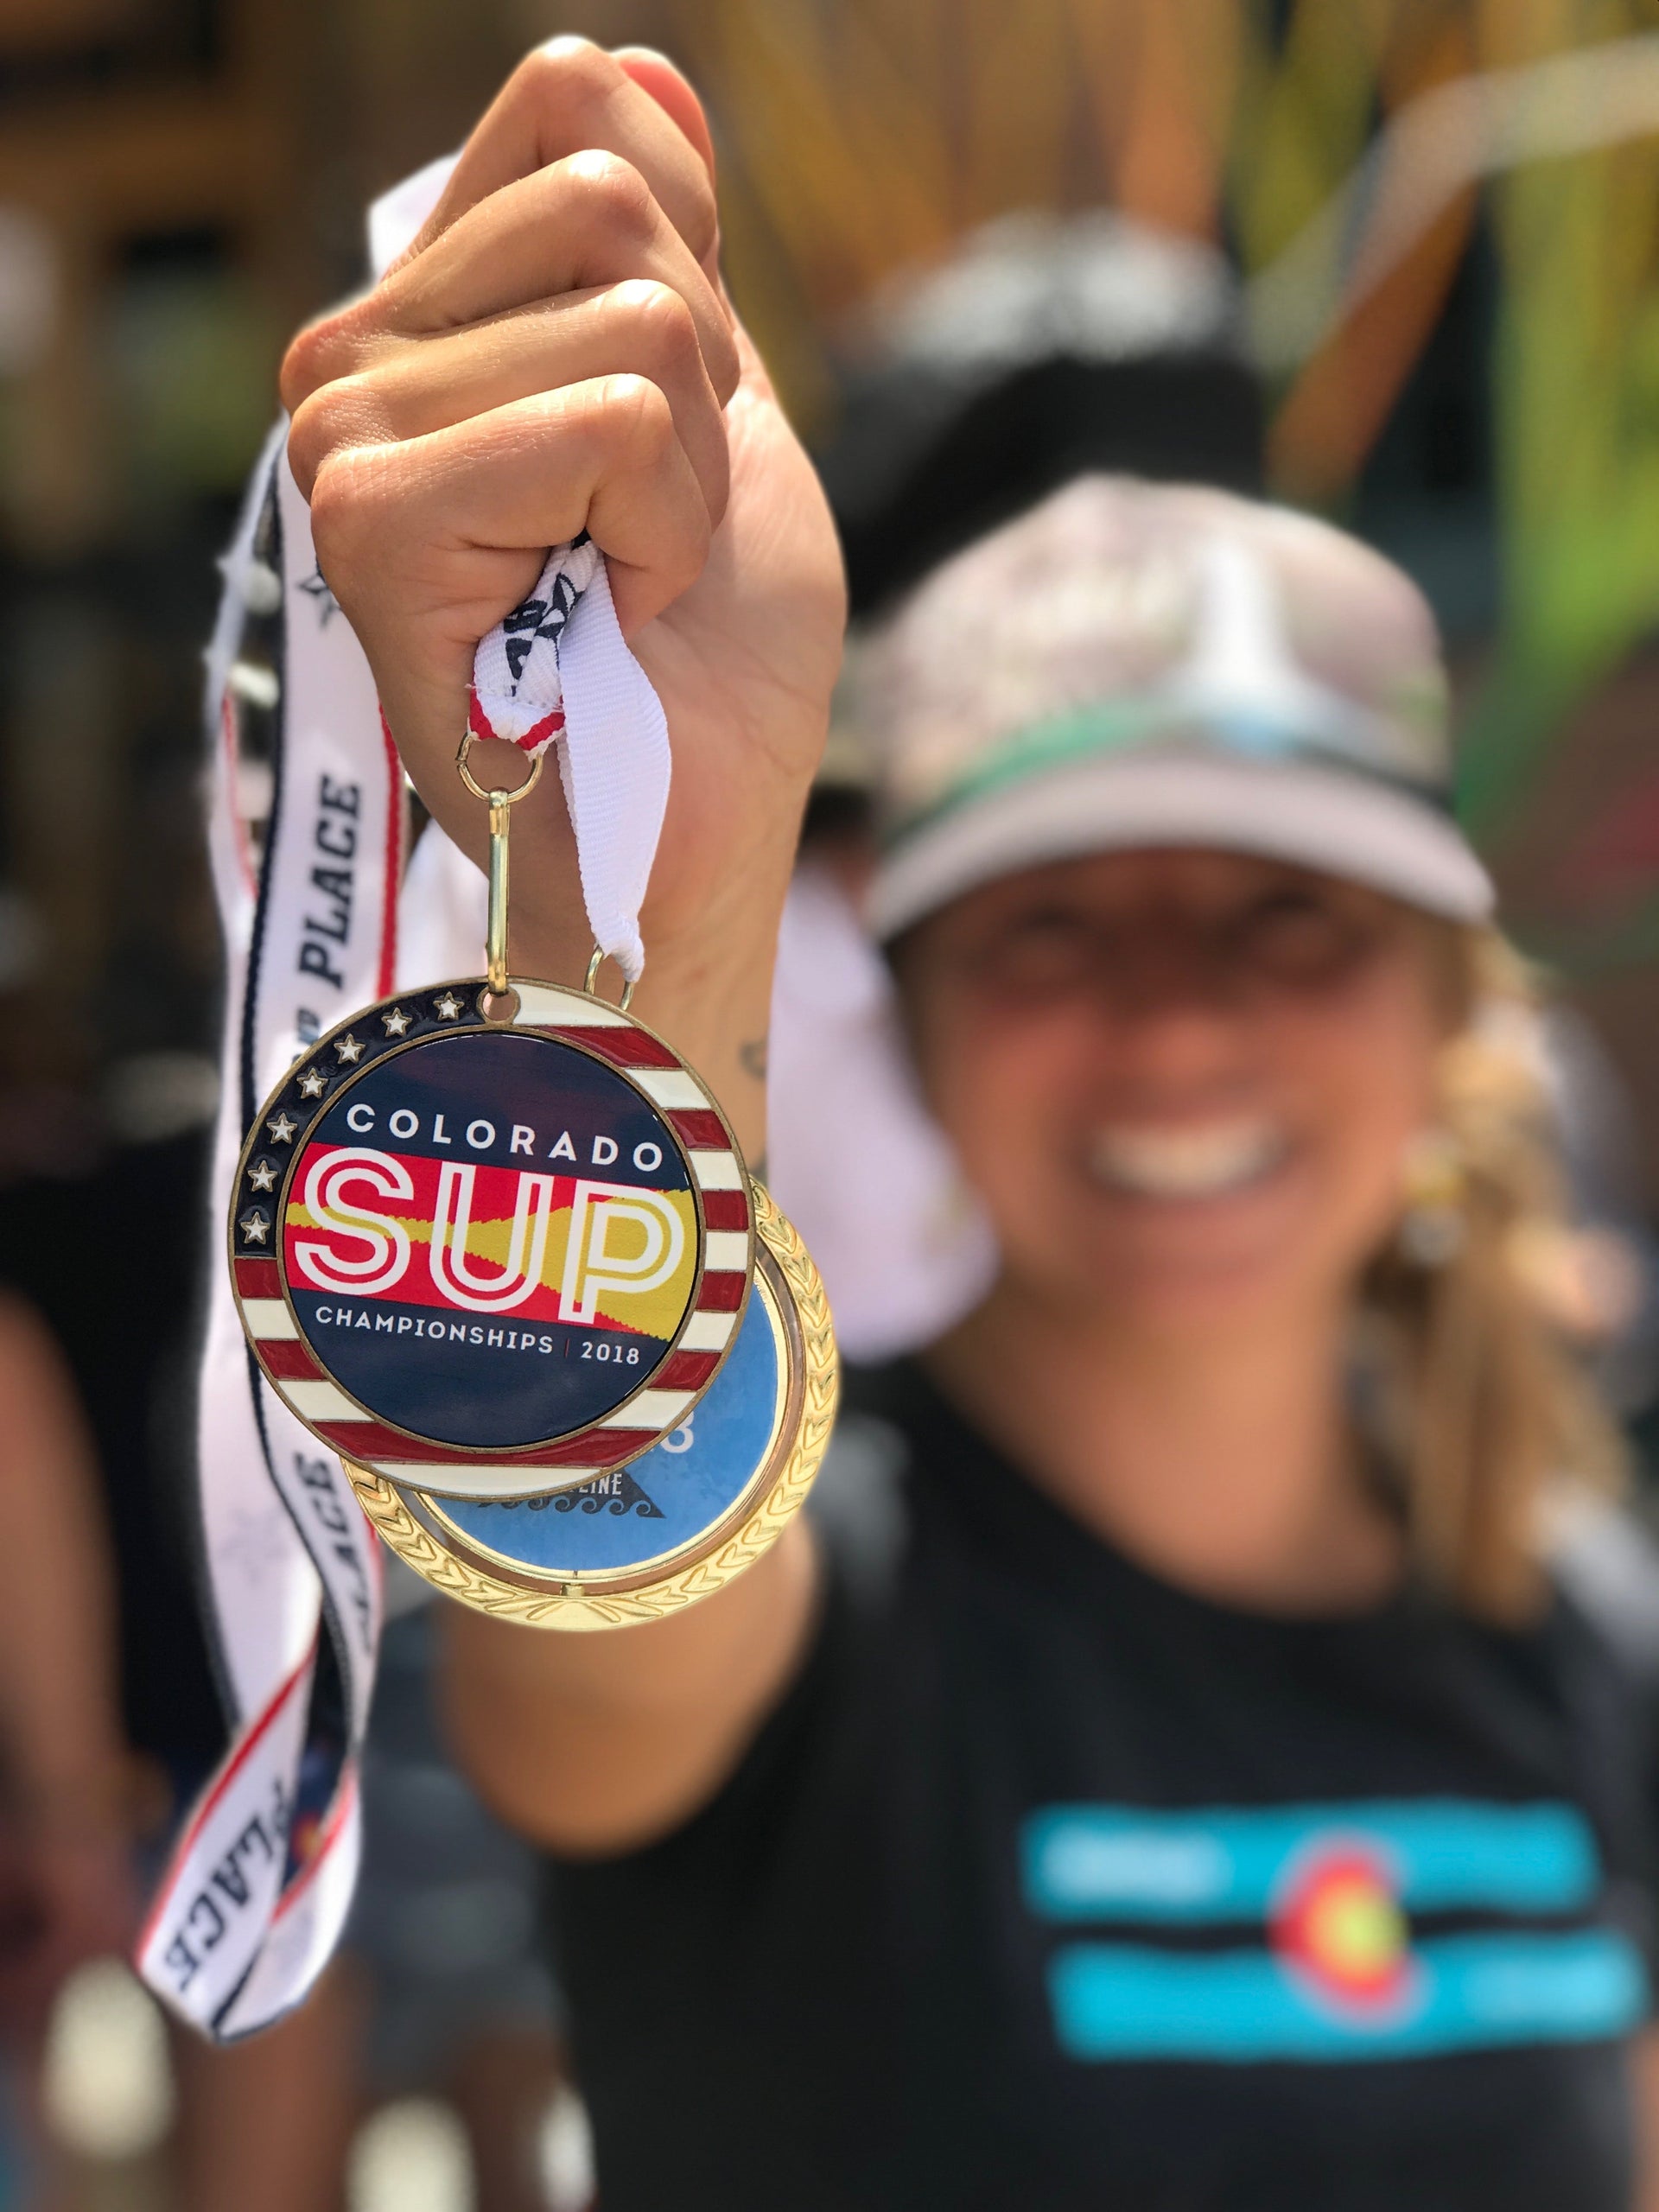 Colorado SUP Championships 2018